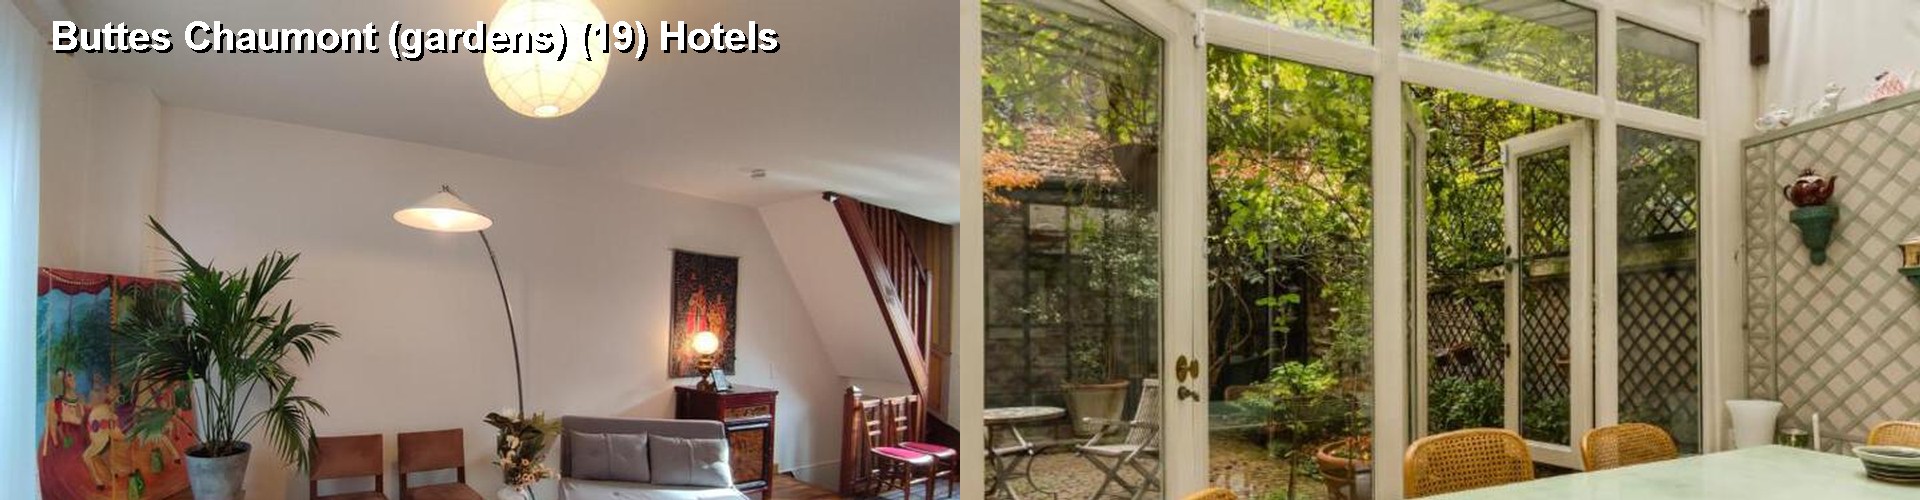 5 Best Hotels near Buttes Chaumont (gardens) (19)